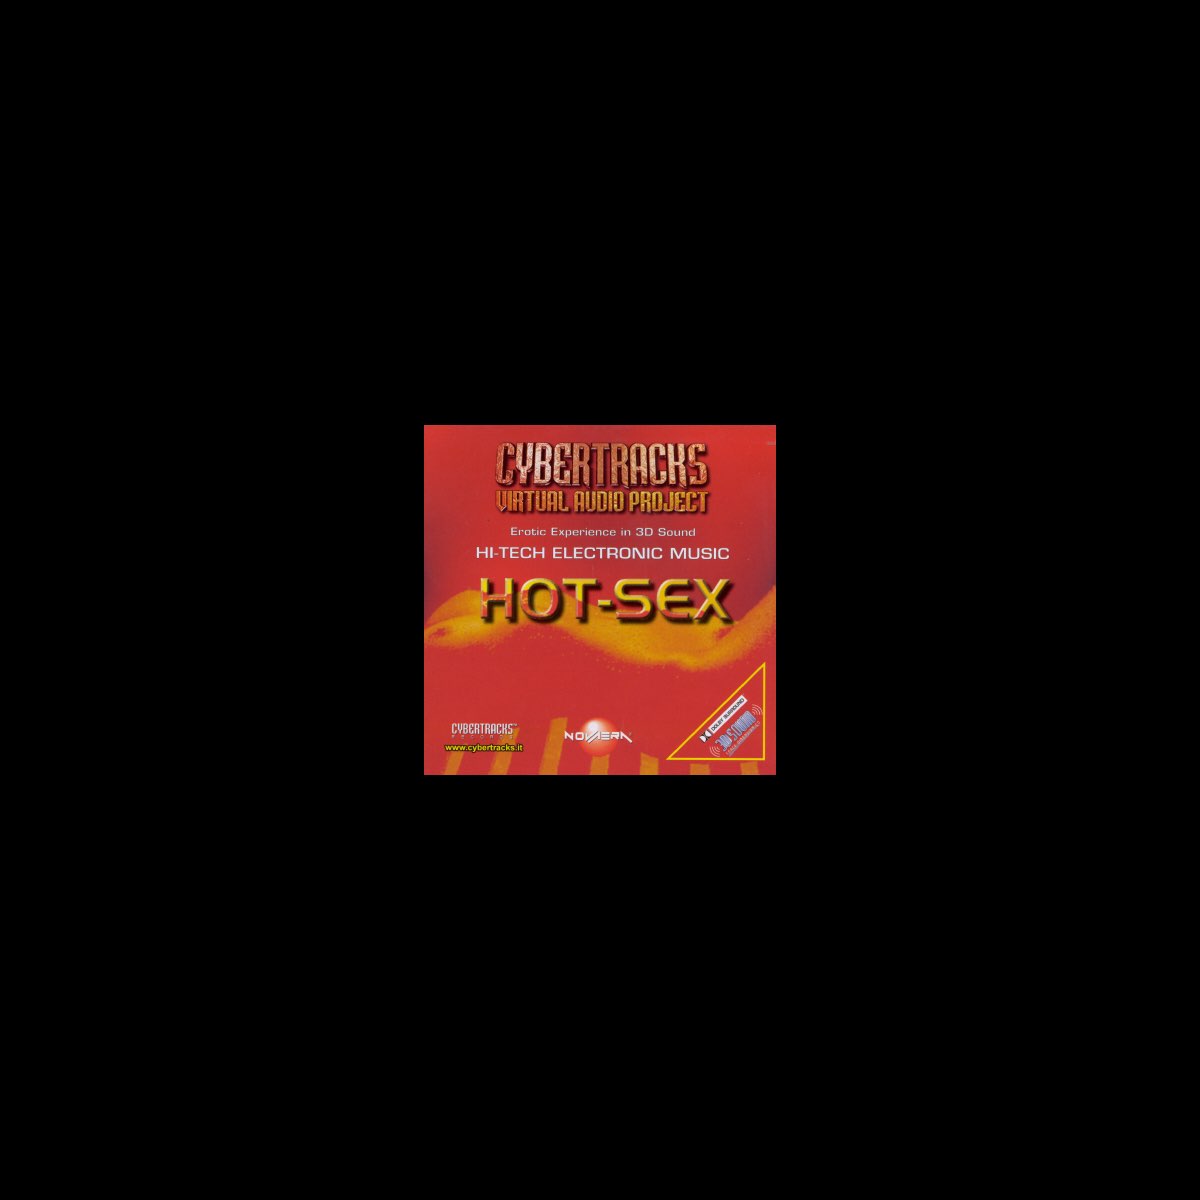 ‎hot Sex By Va Cybertracks On Apple Music 4550